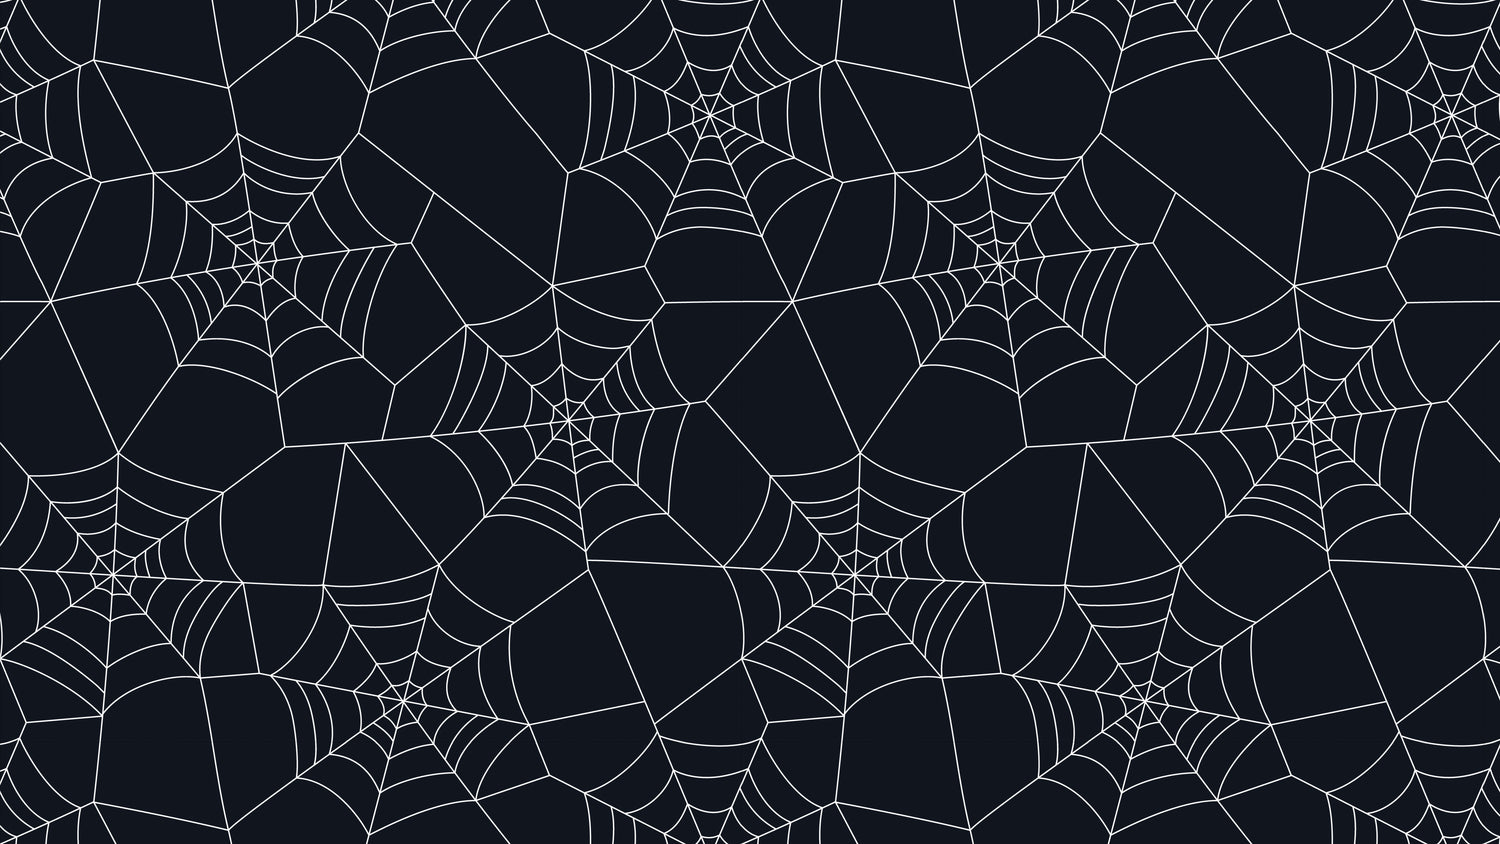 Spiderwebs